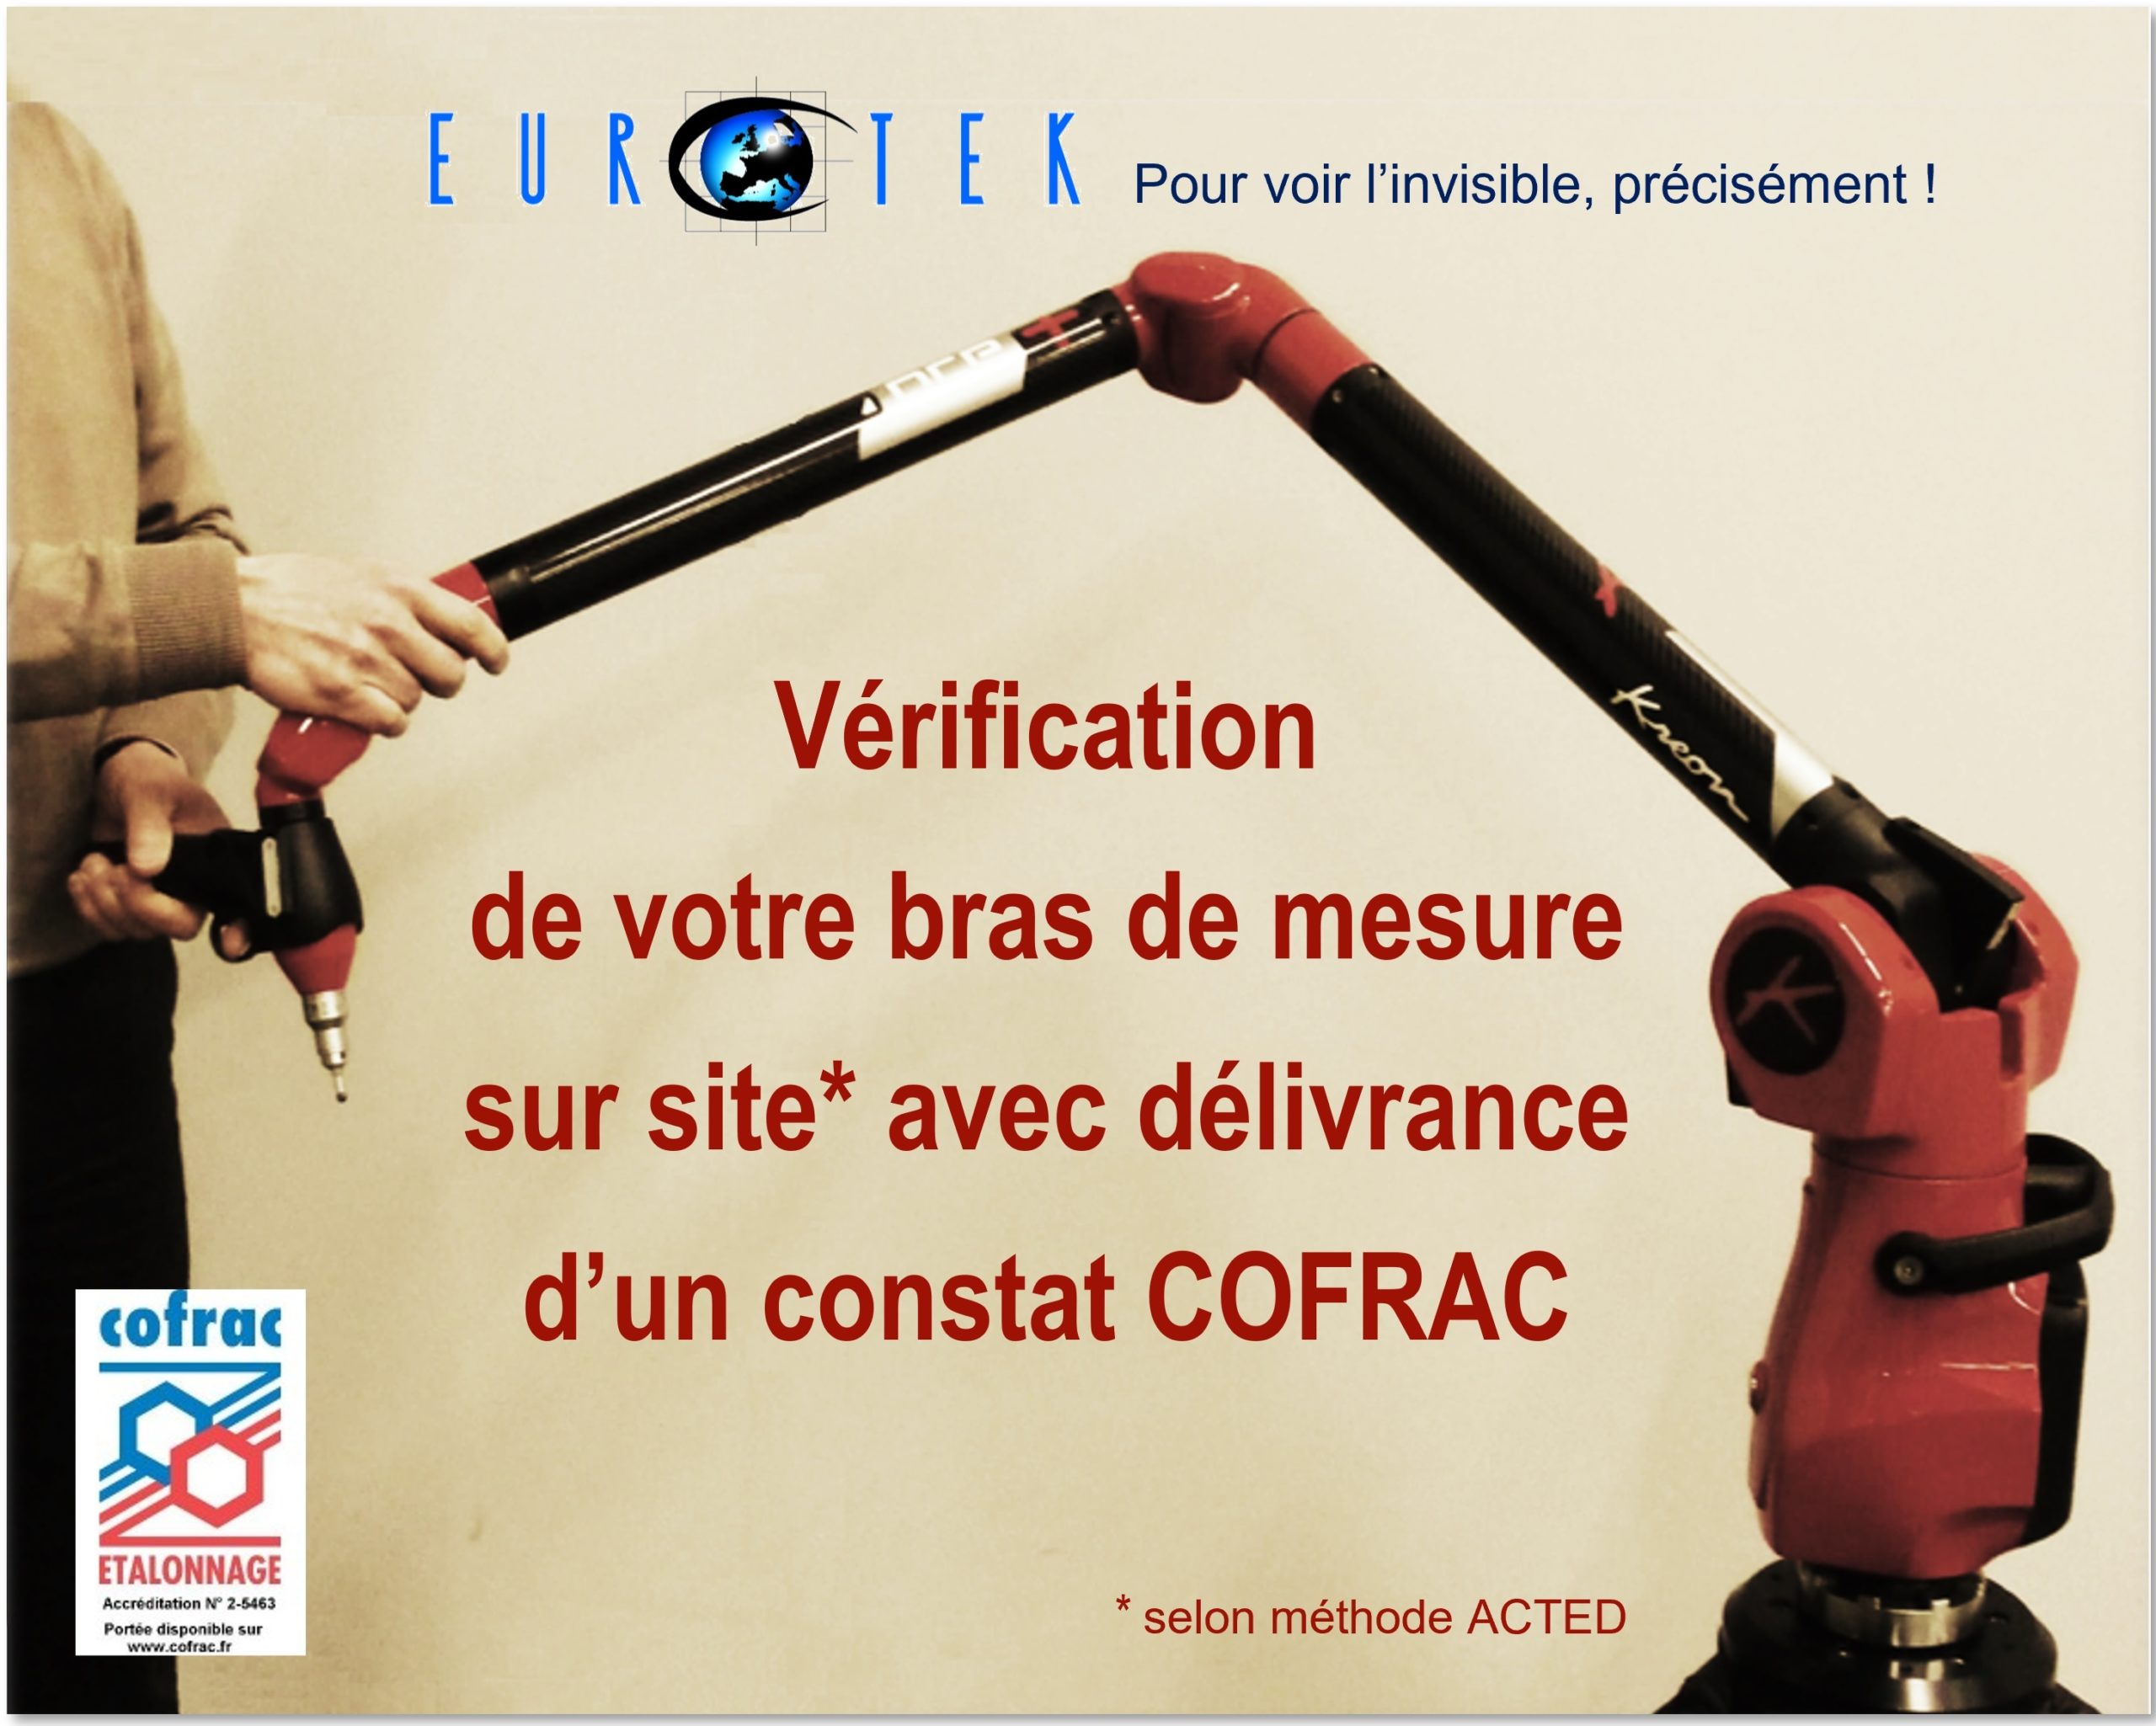 Vérification bras articulé avec certification COFRAC selon méthode ACTED